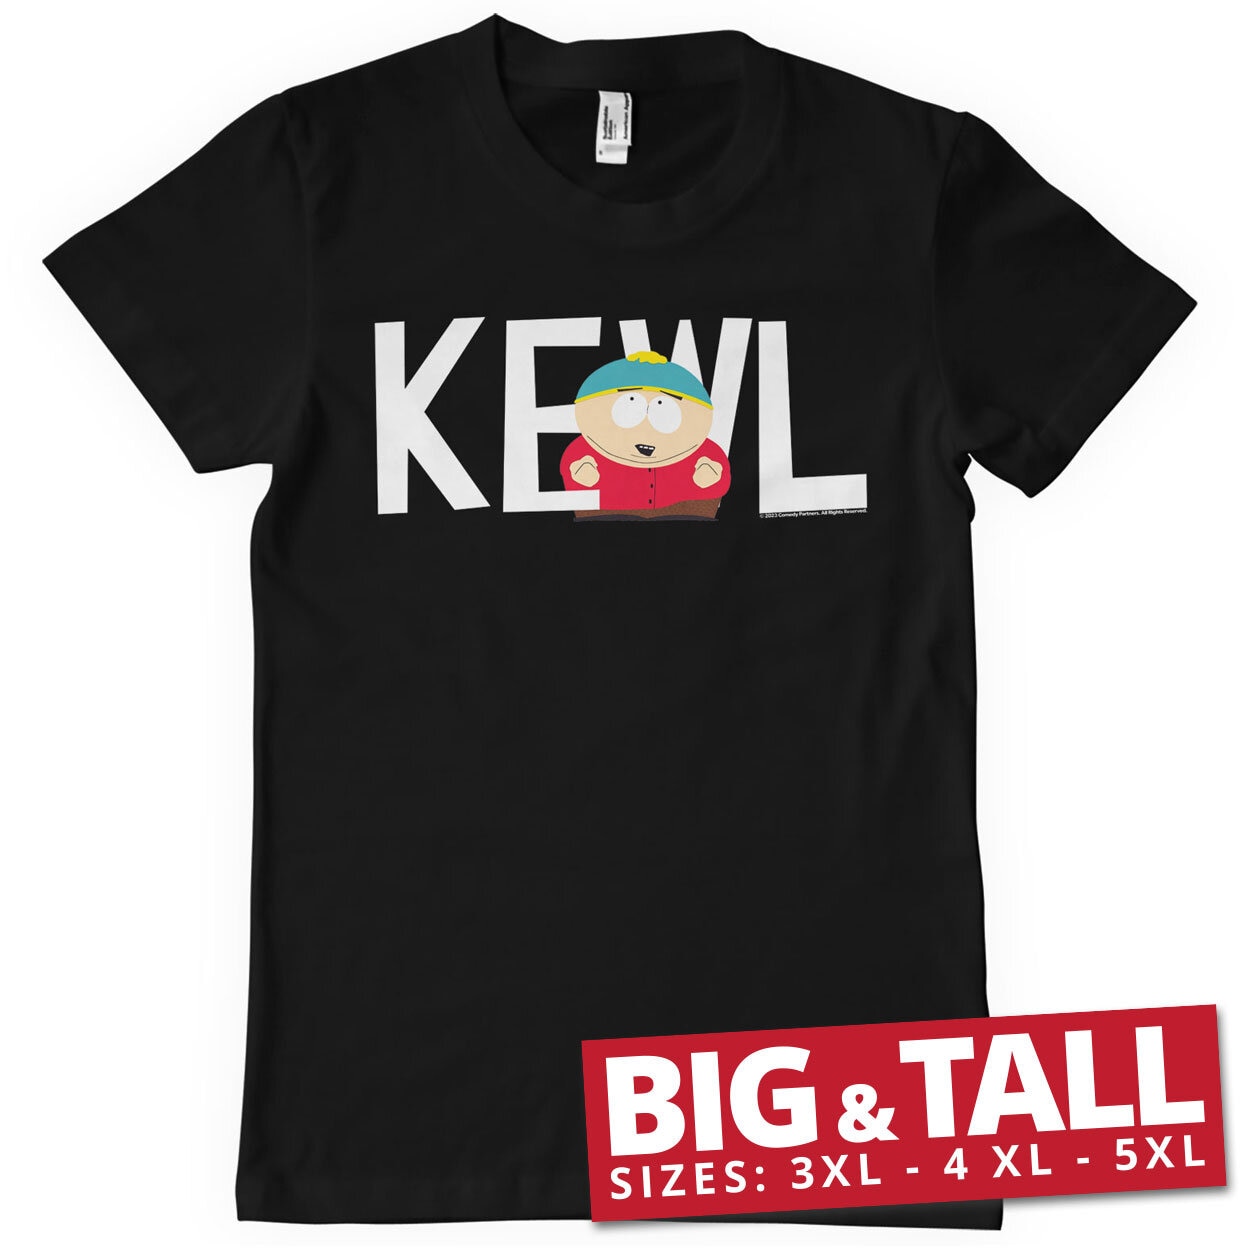 South Park KEWL Big & Tall T-Shirt